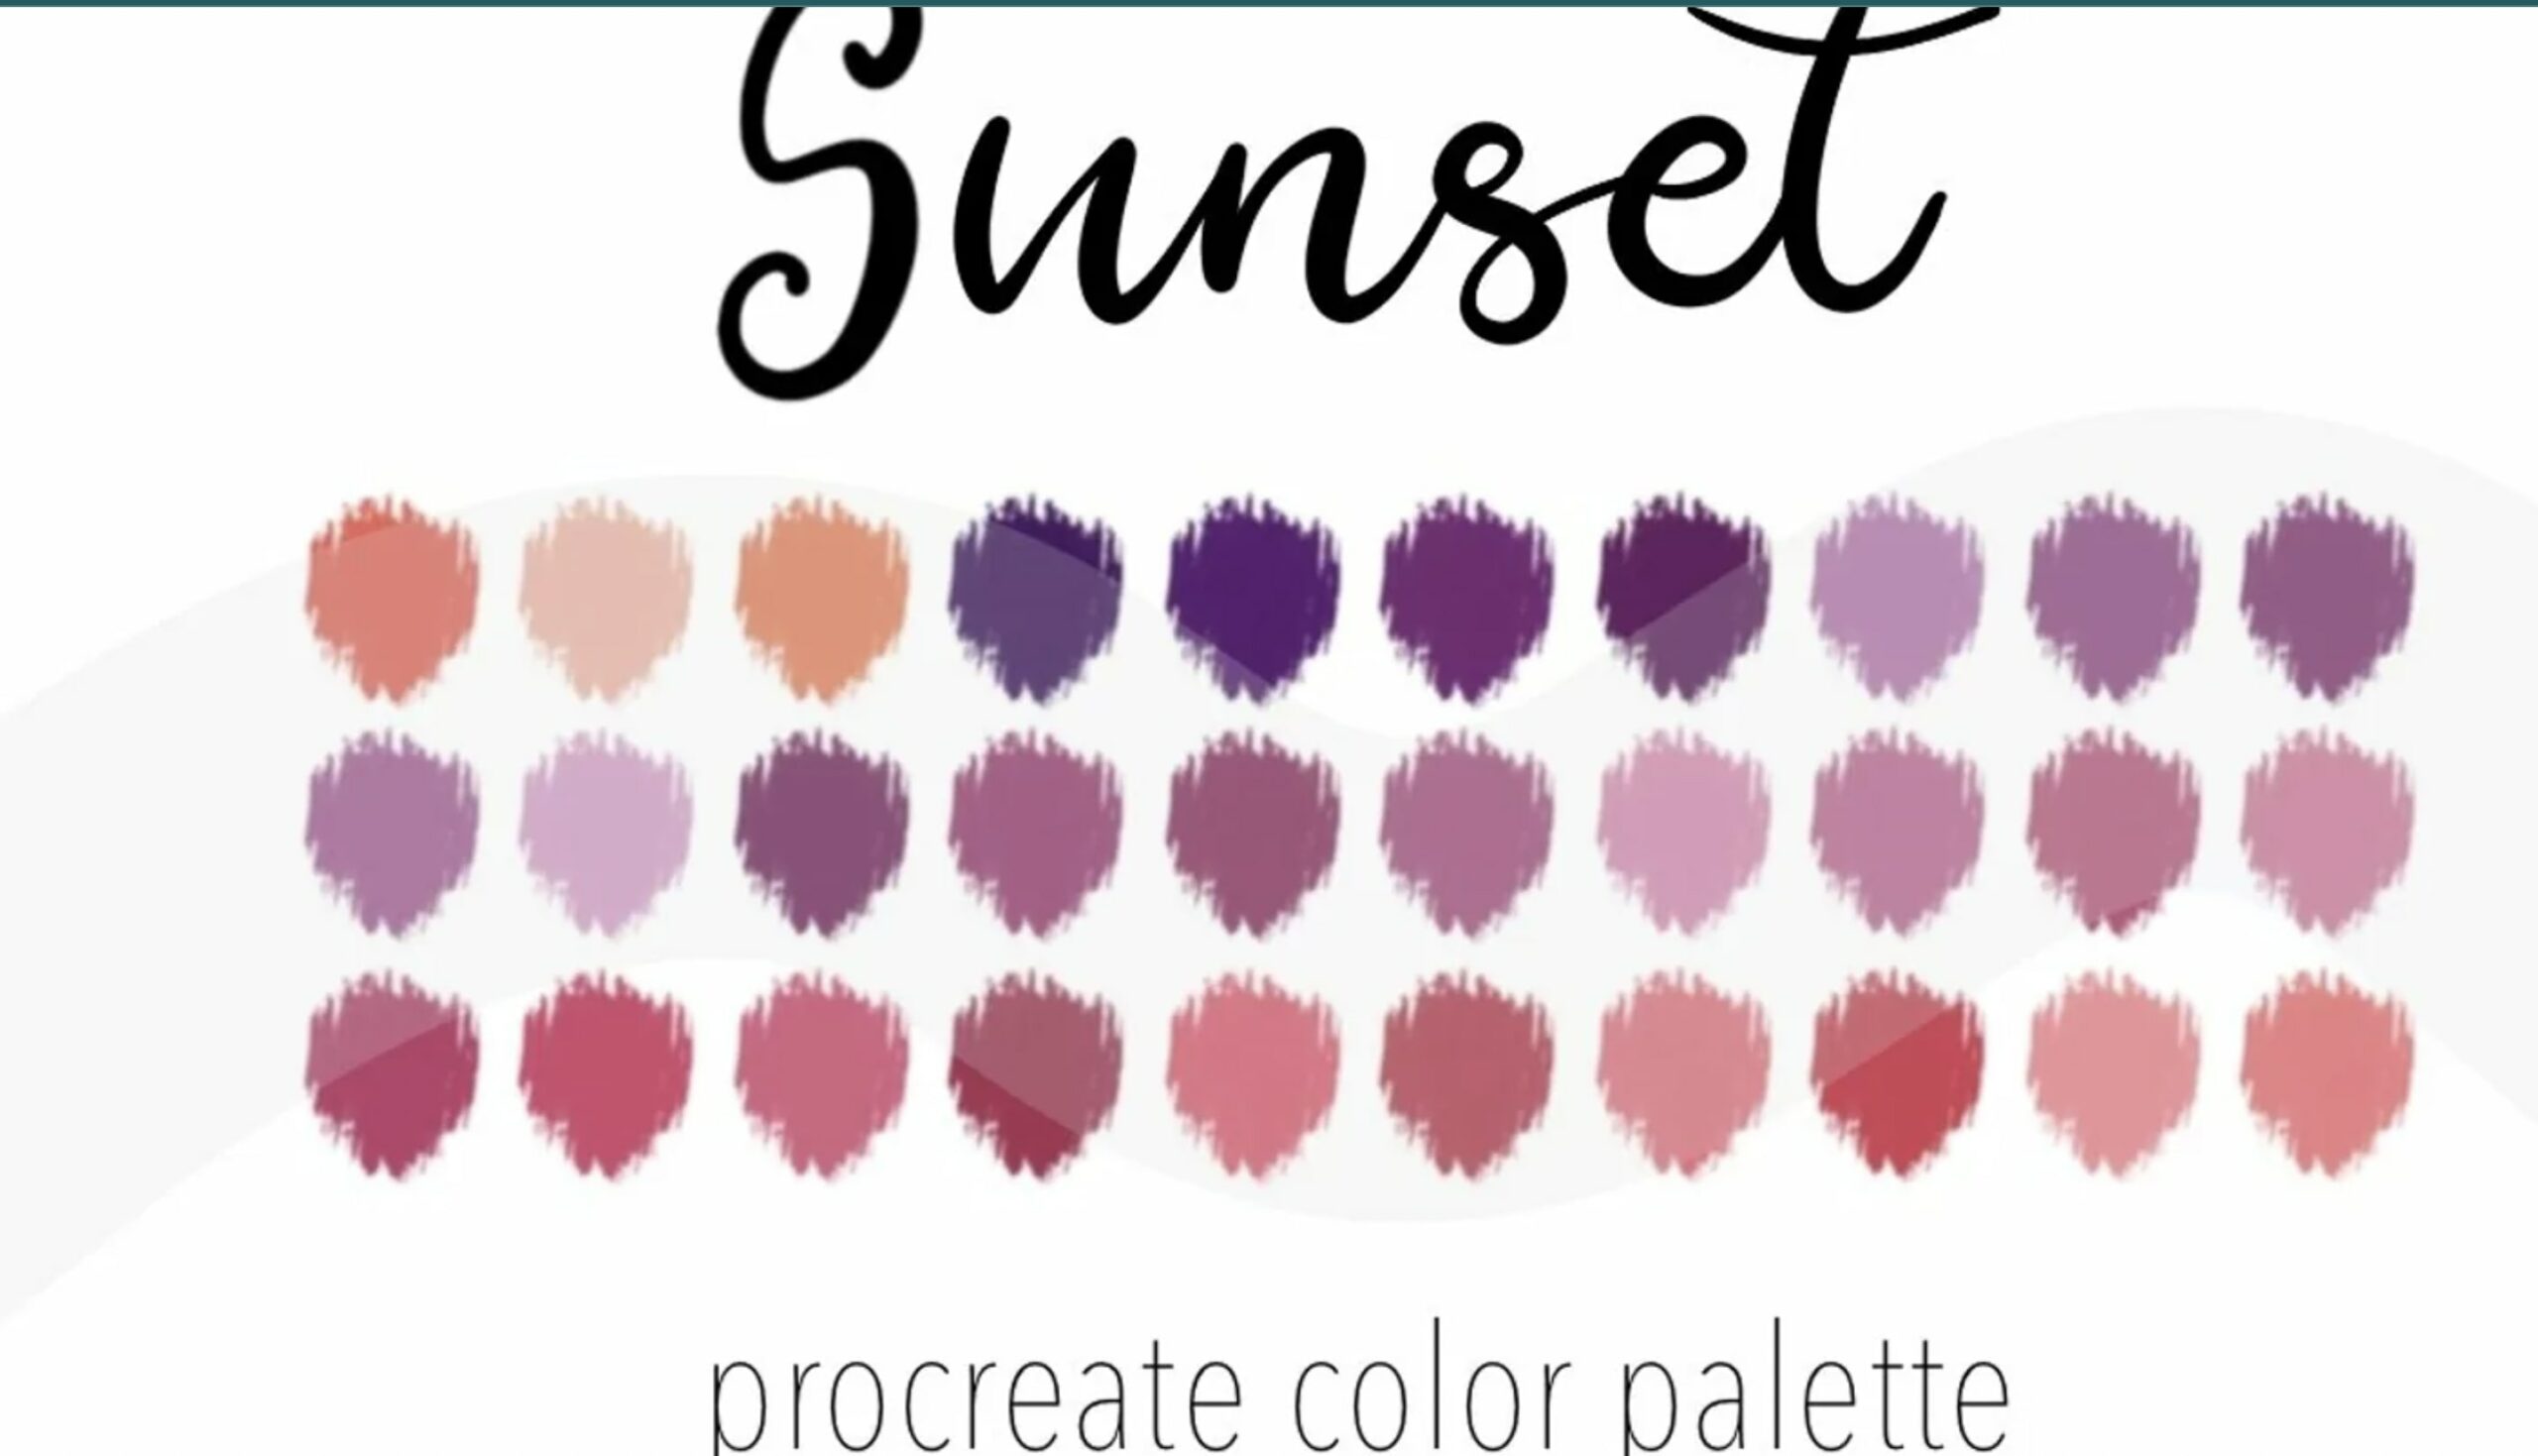 Procreate color palette